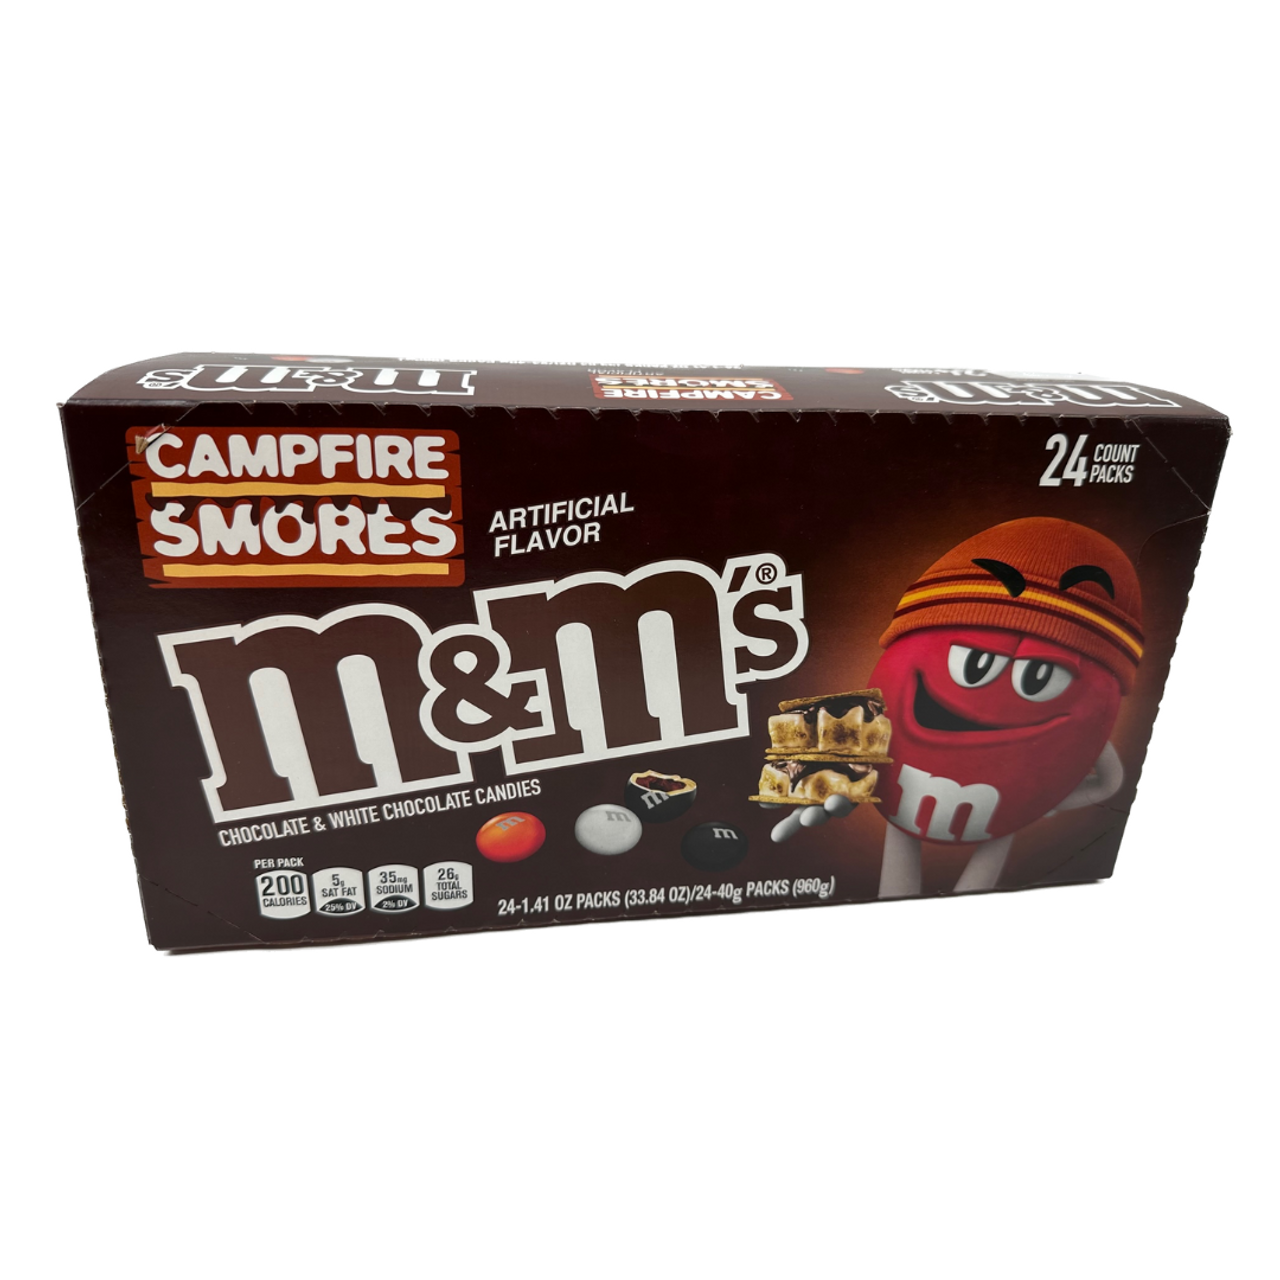 M&M - 24 Pack (1 Box) - Caramel - Super Wholesale USA